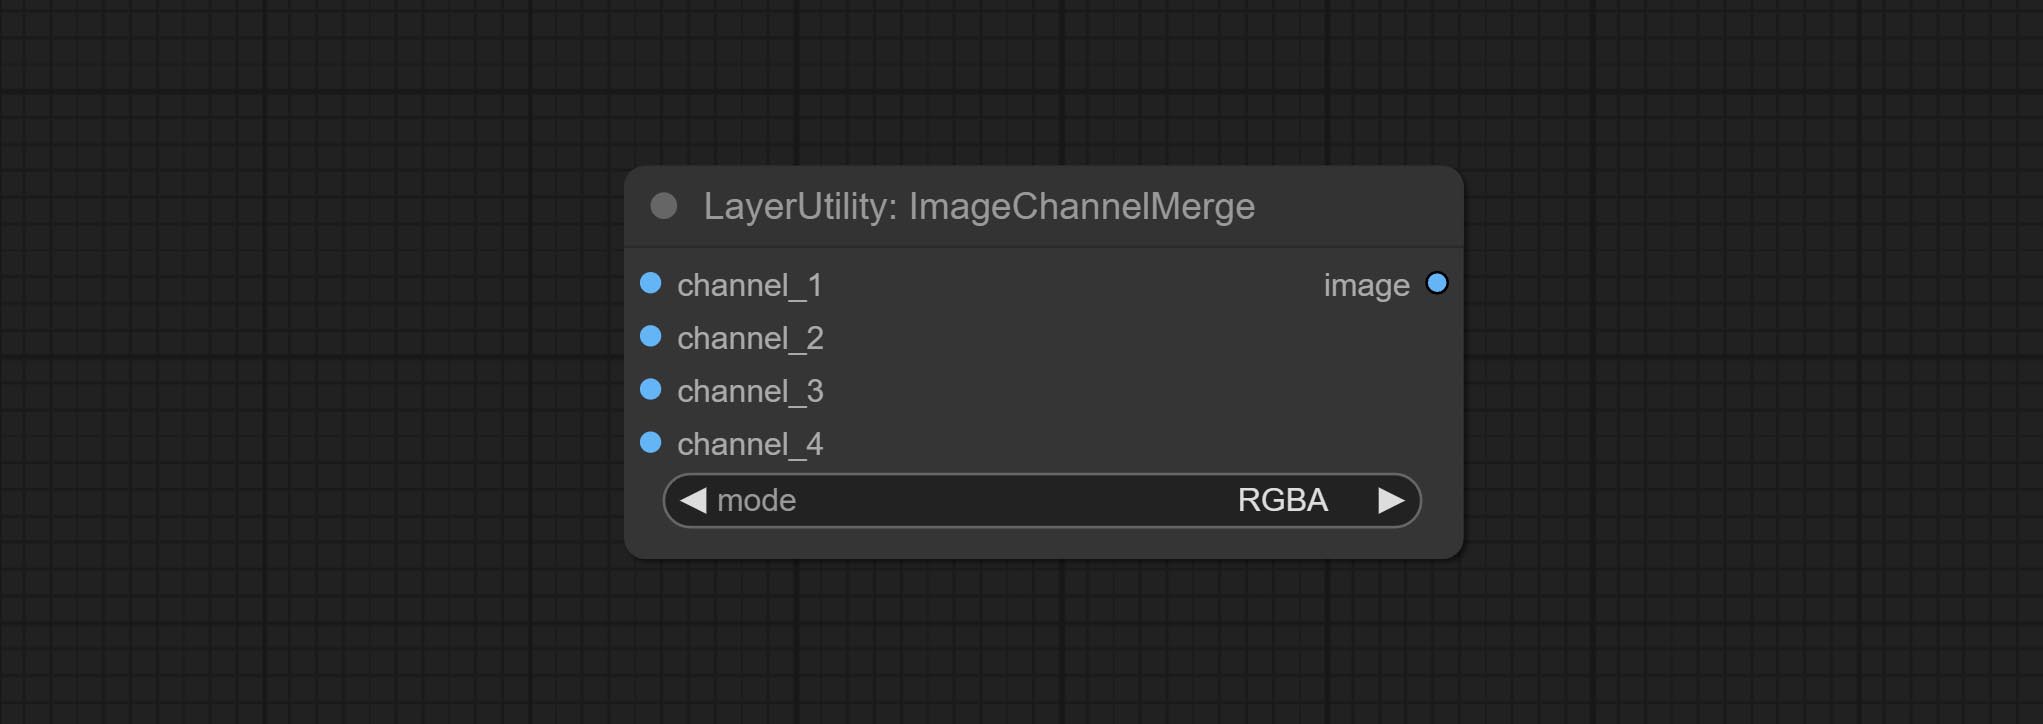 image_channel_merge_node.jpg